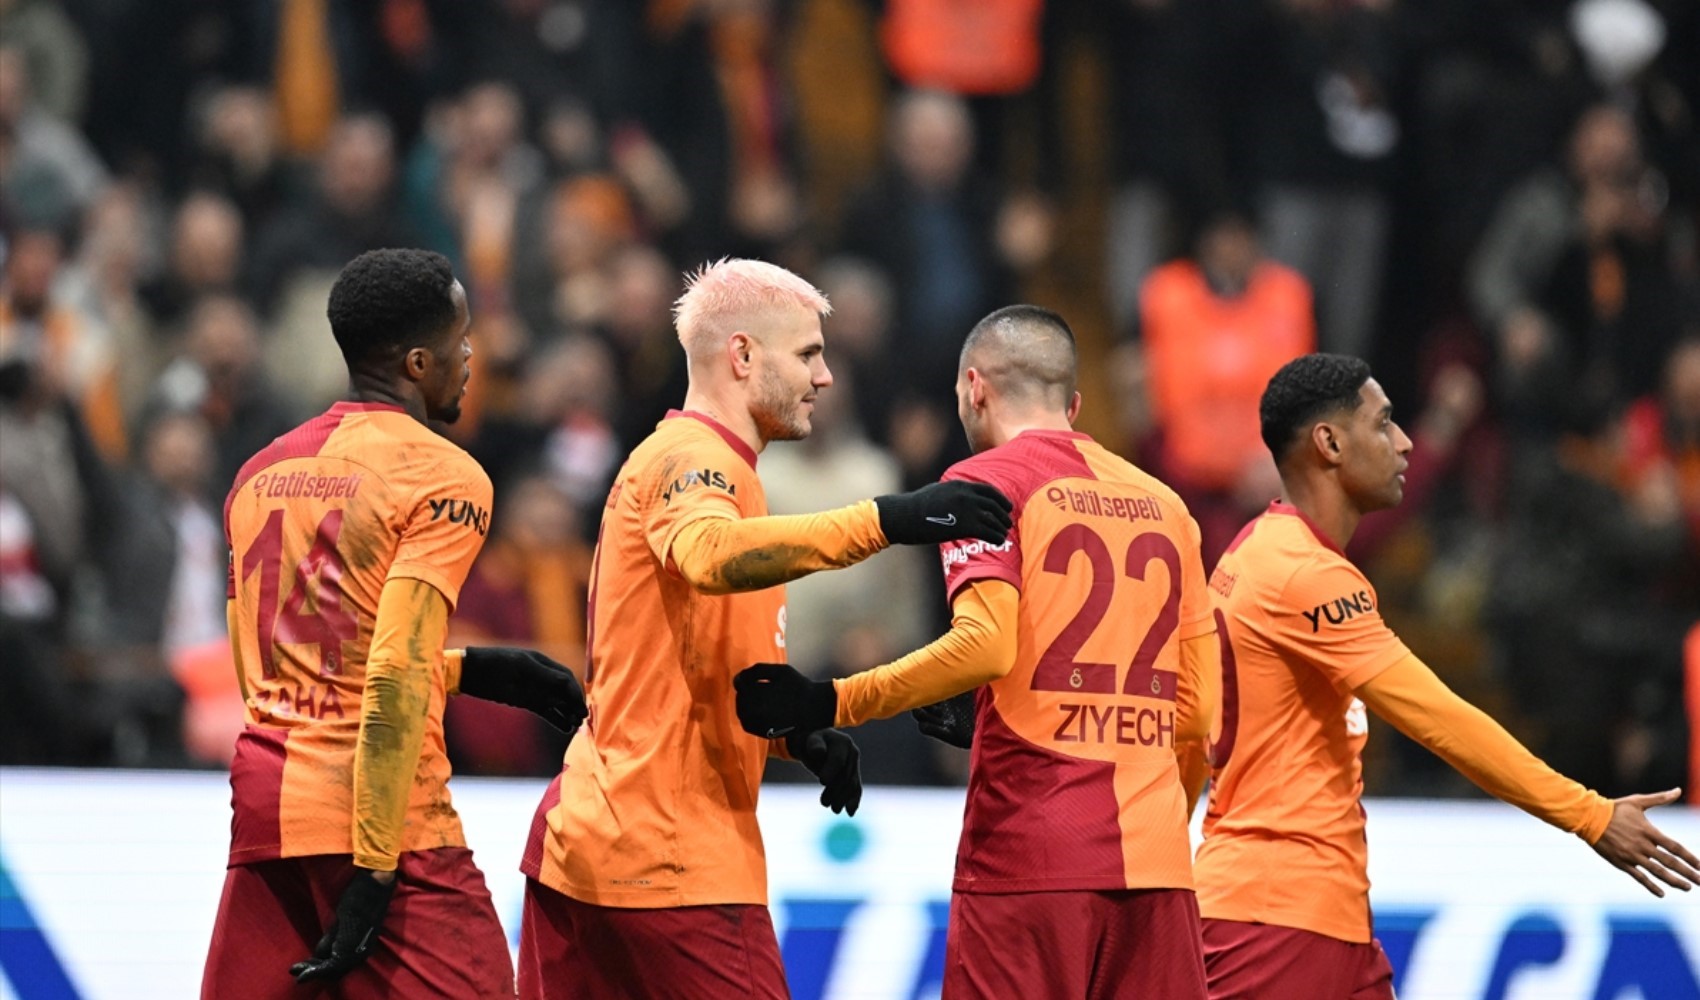 Galatasaray bu sezon ilk kez 6 gol attı!